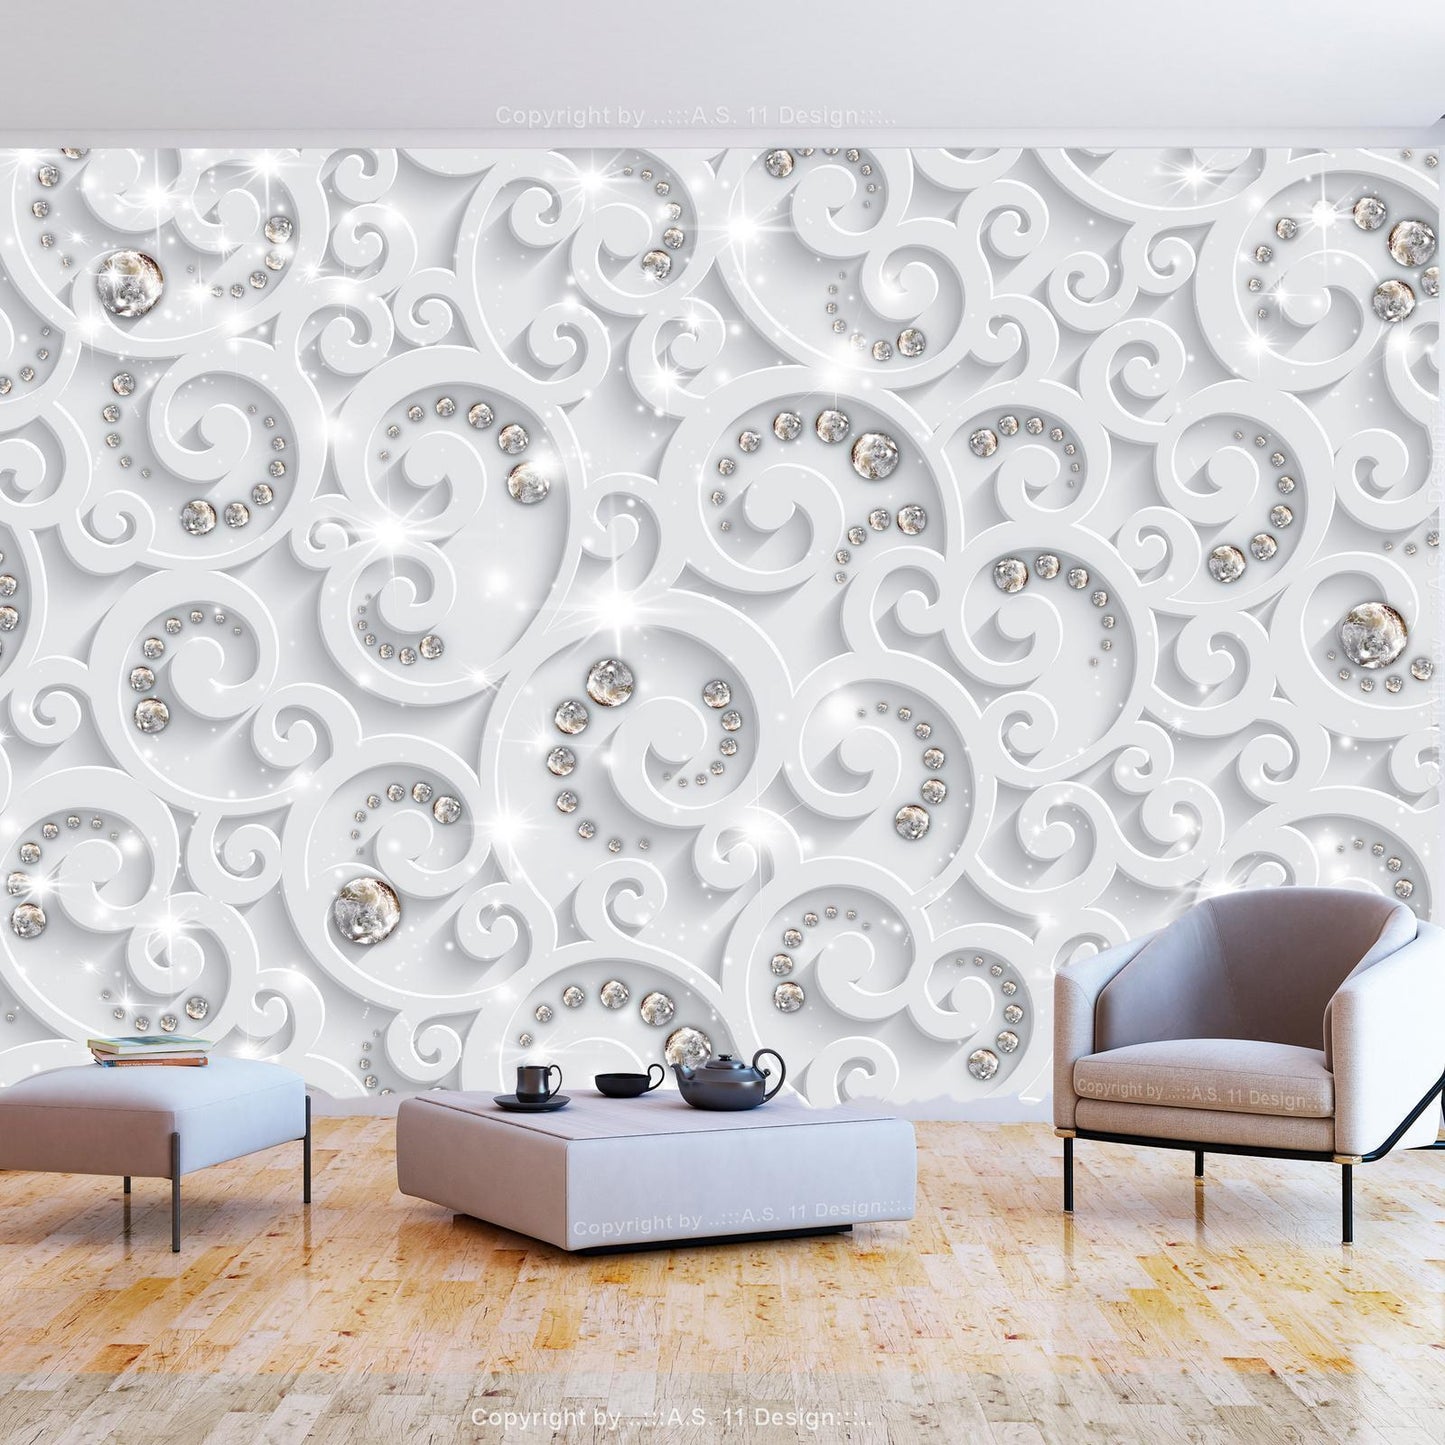 Wall Mural - Abstract Glamor